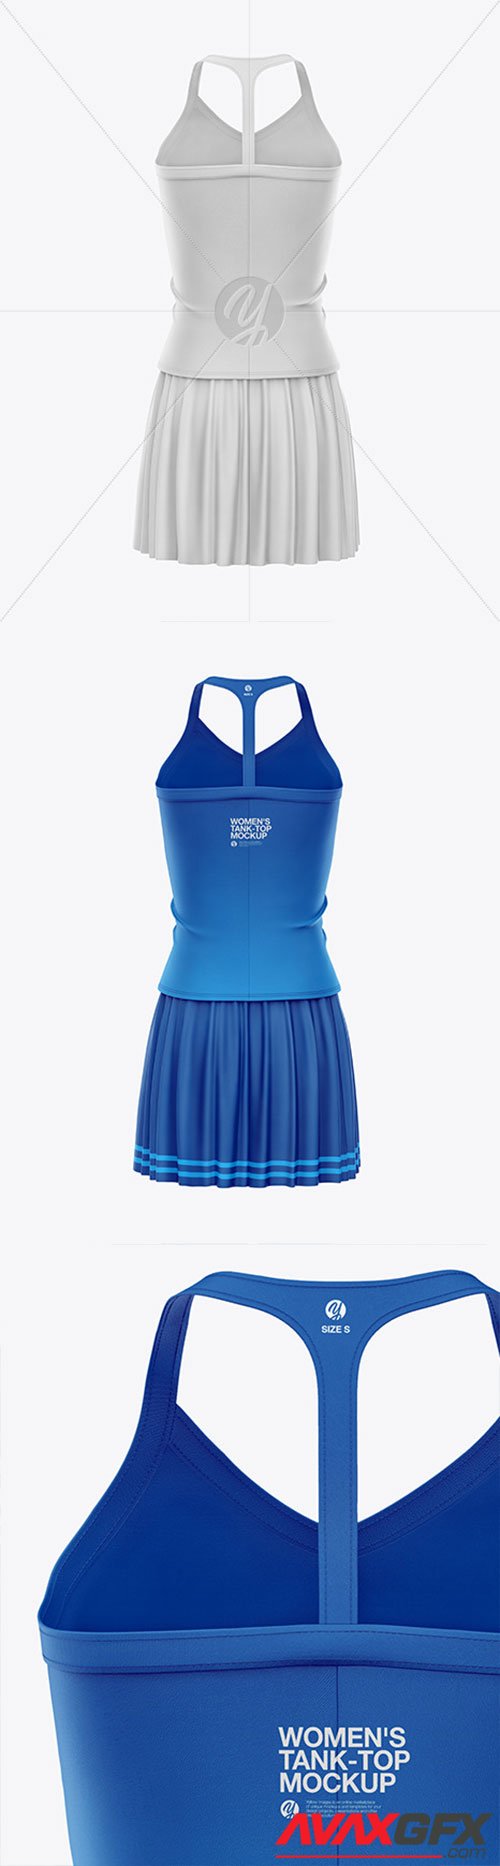 Women's Tennis Clothing Set Mockup 60722